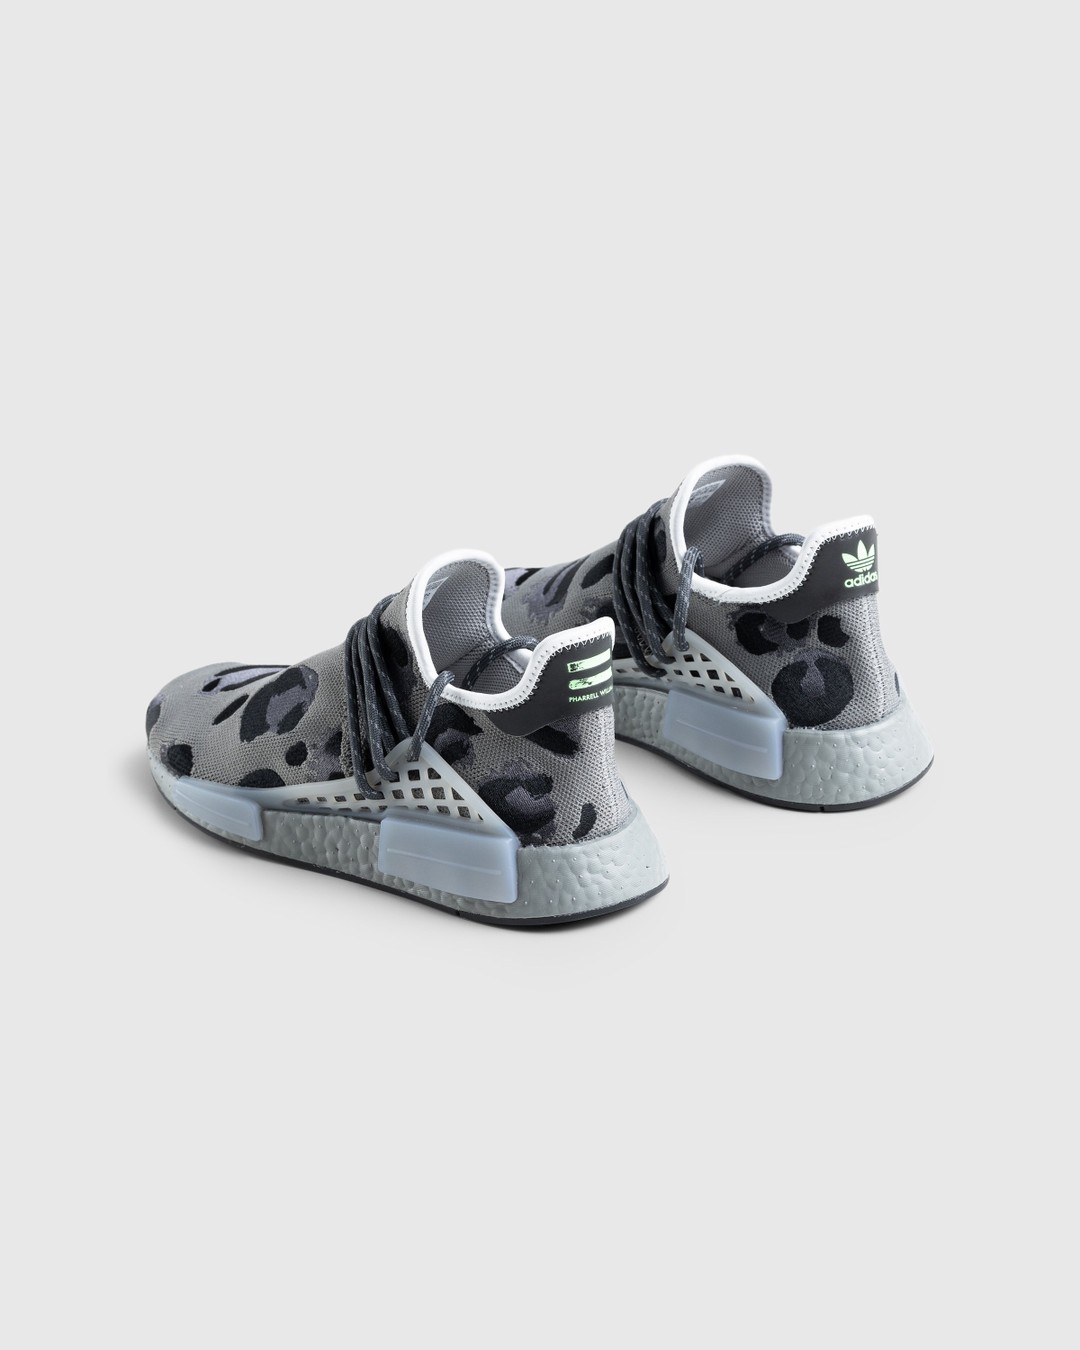 Adidas – Pharrell NMD Hu Animal Print Ash Grey - Low Top Sneakers - Grey - Image 4